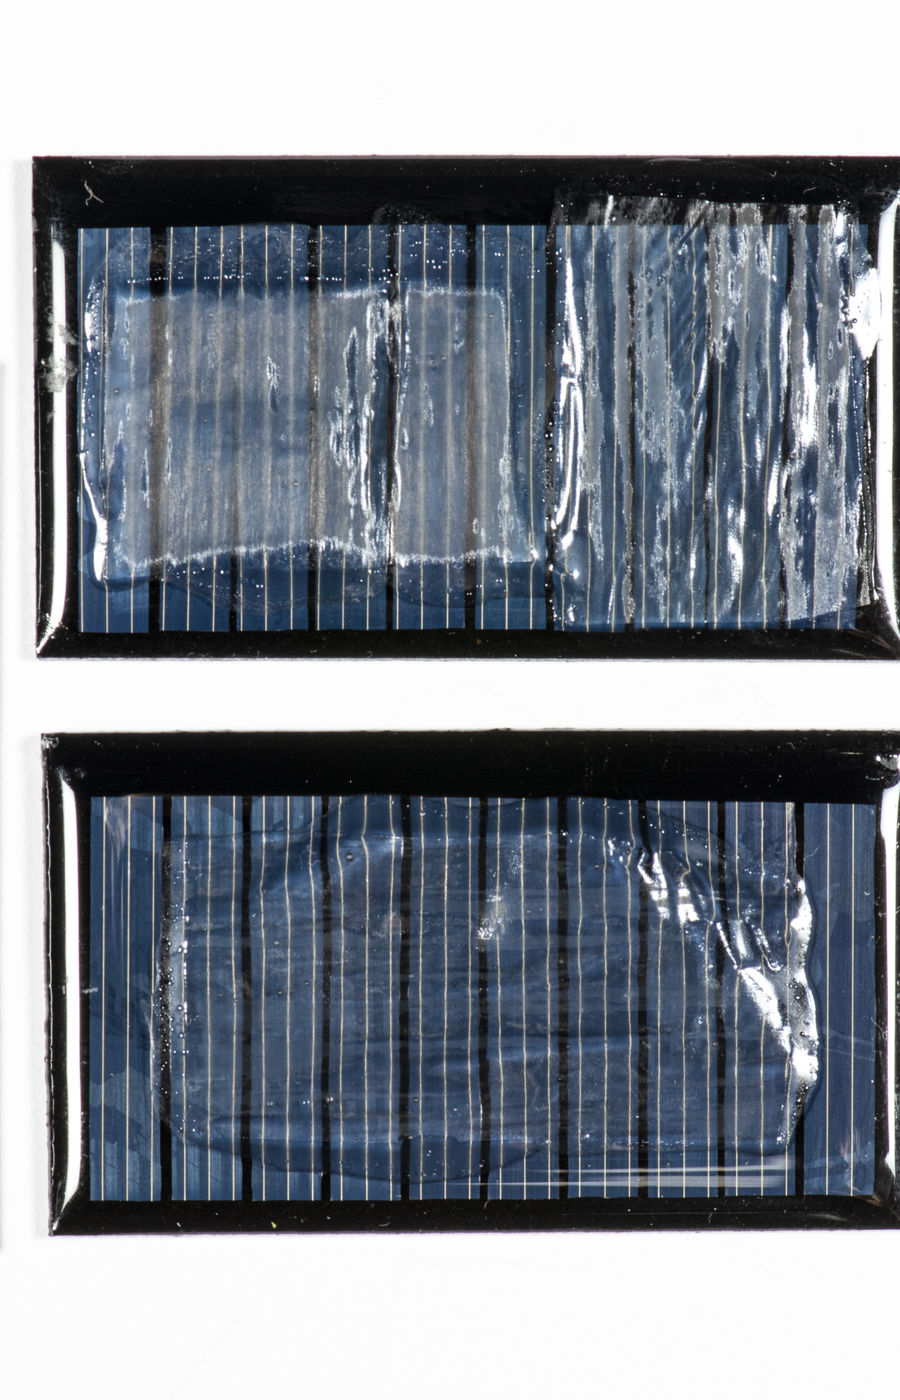 Solar panel shields